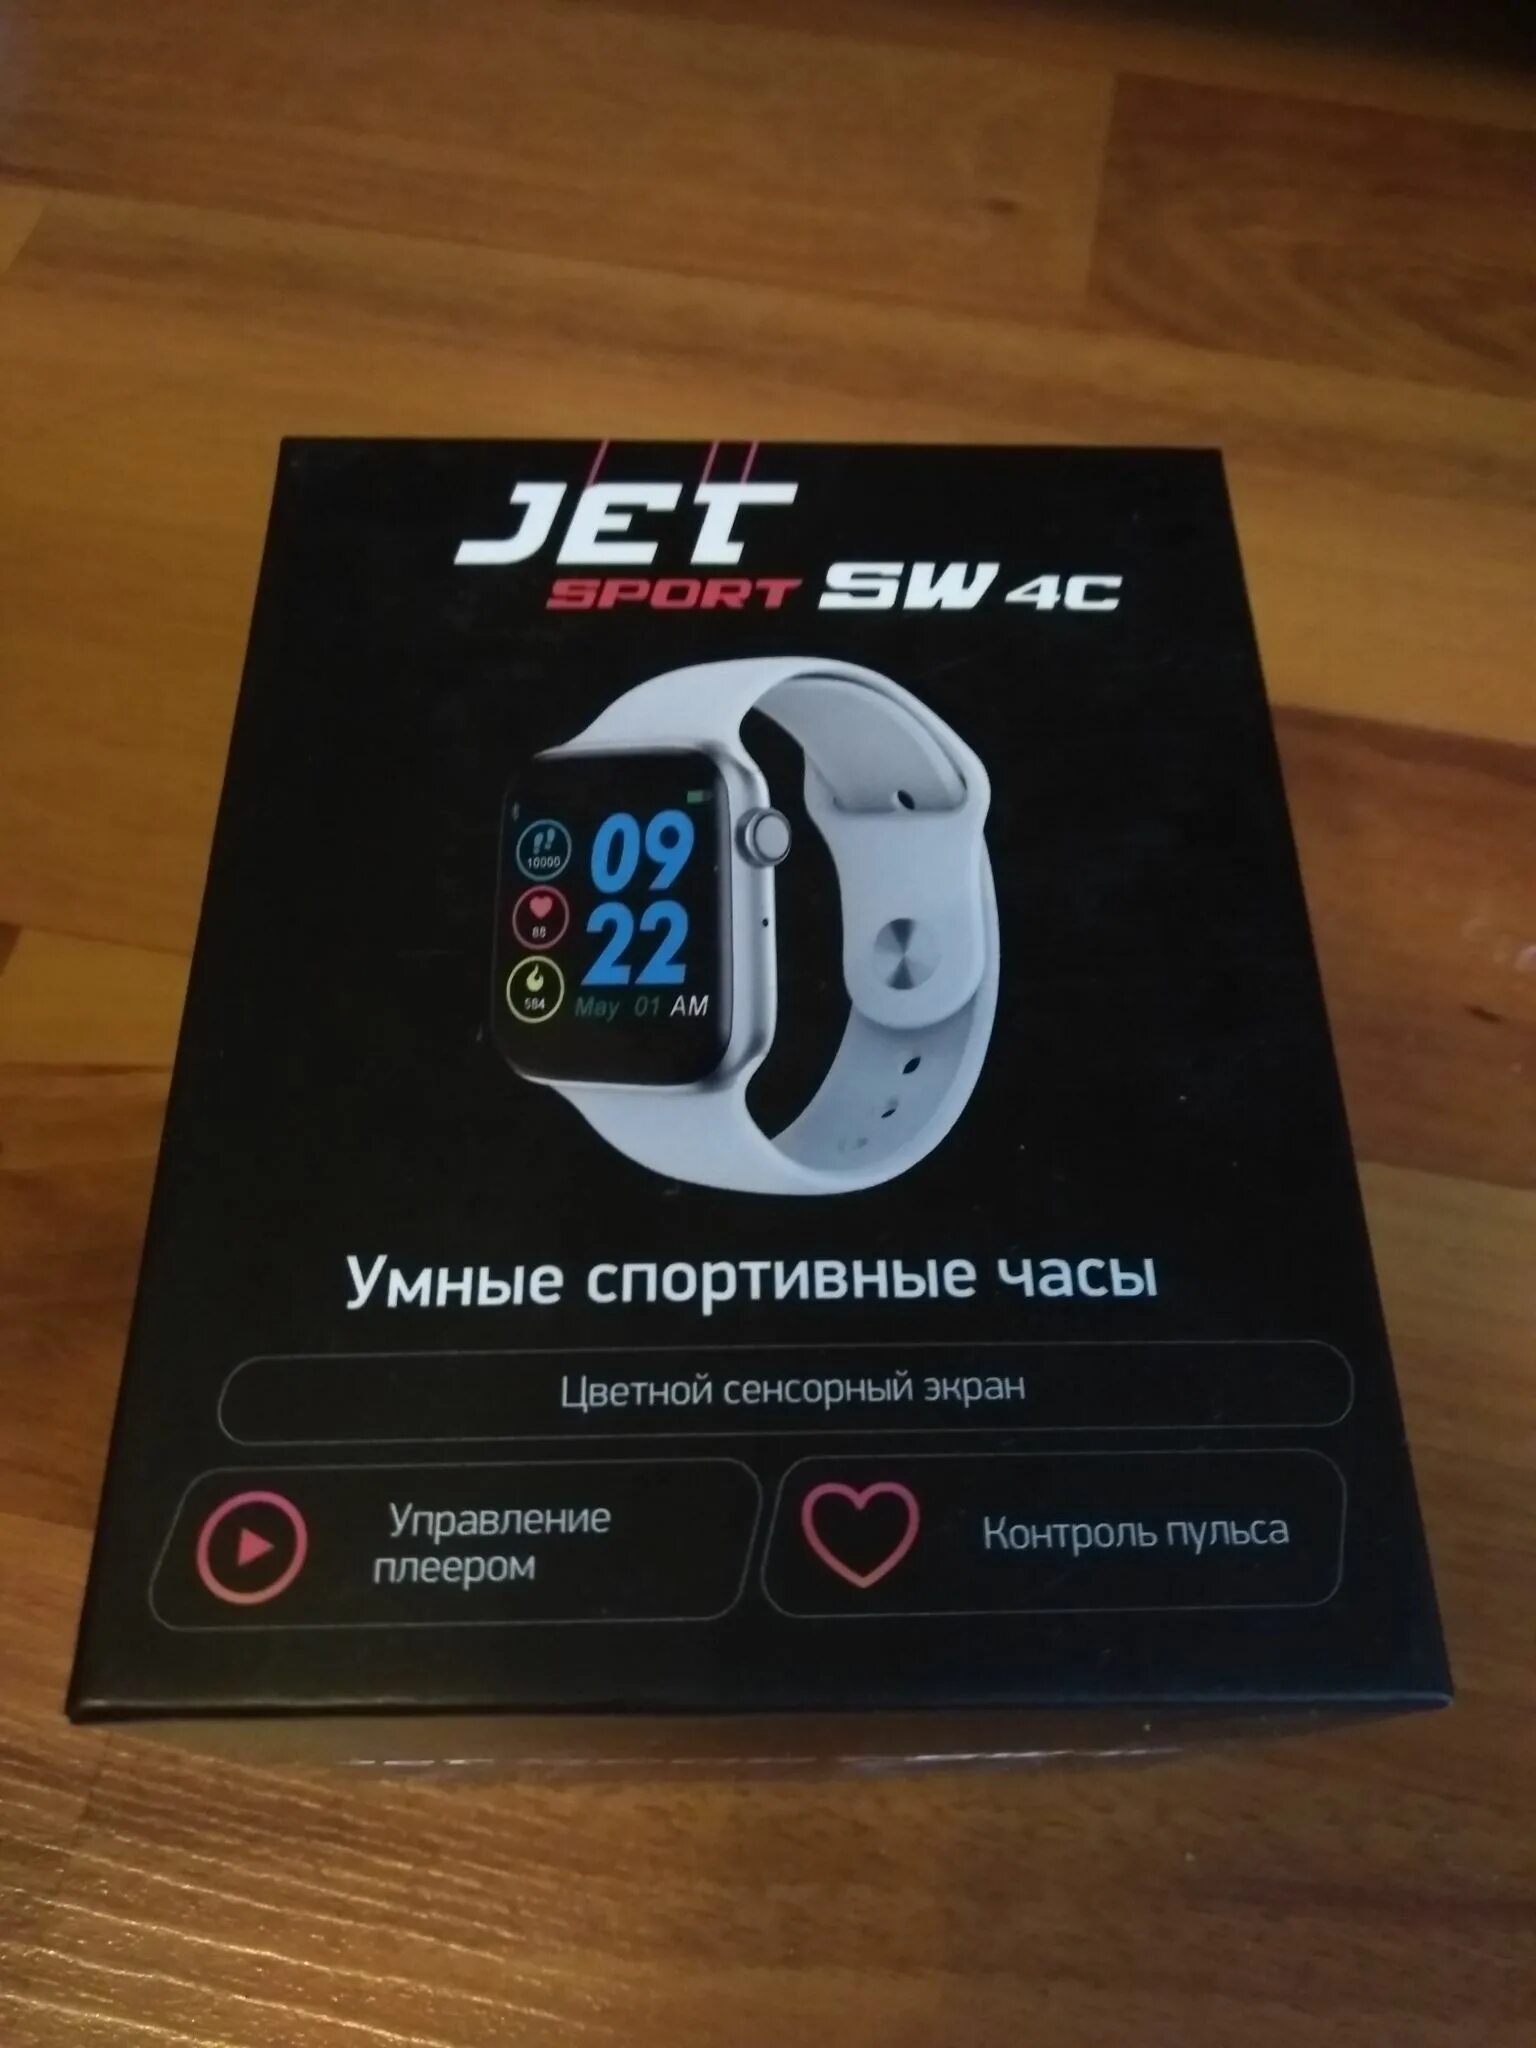 Jet Sport SW-4c. Смарт Jet Sport sw4. Спортивные часы Jet Sport SW-4c. Jet Sport SW-4c Silver. Подключить jet sport